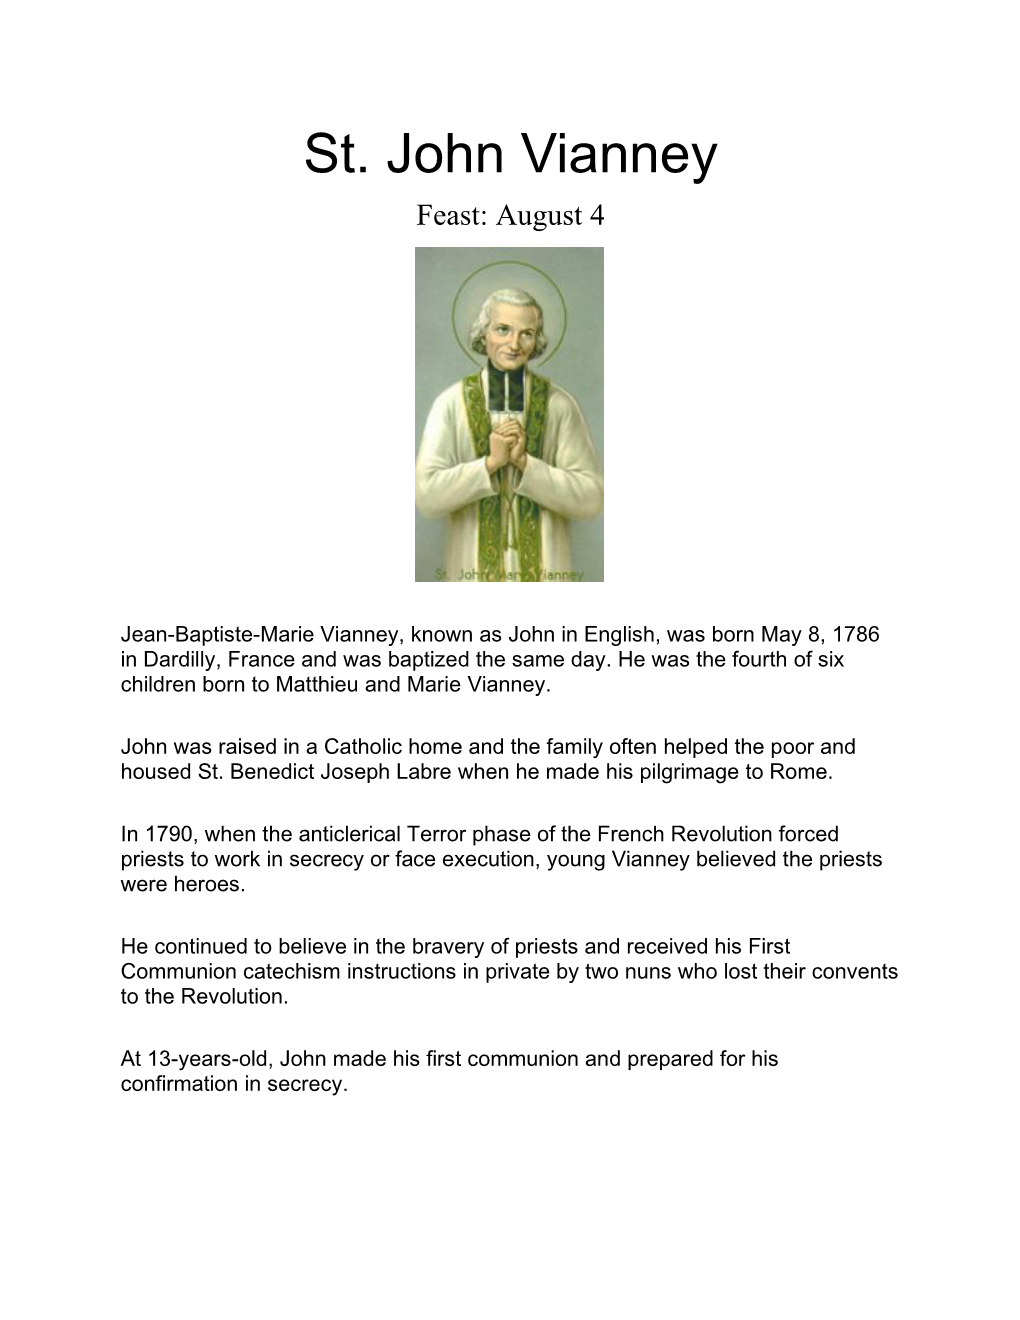 St. John Vianney Feast: August 4